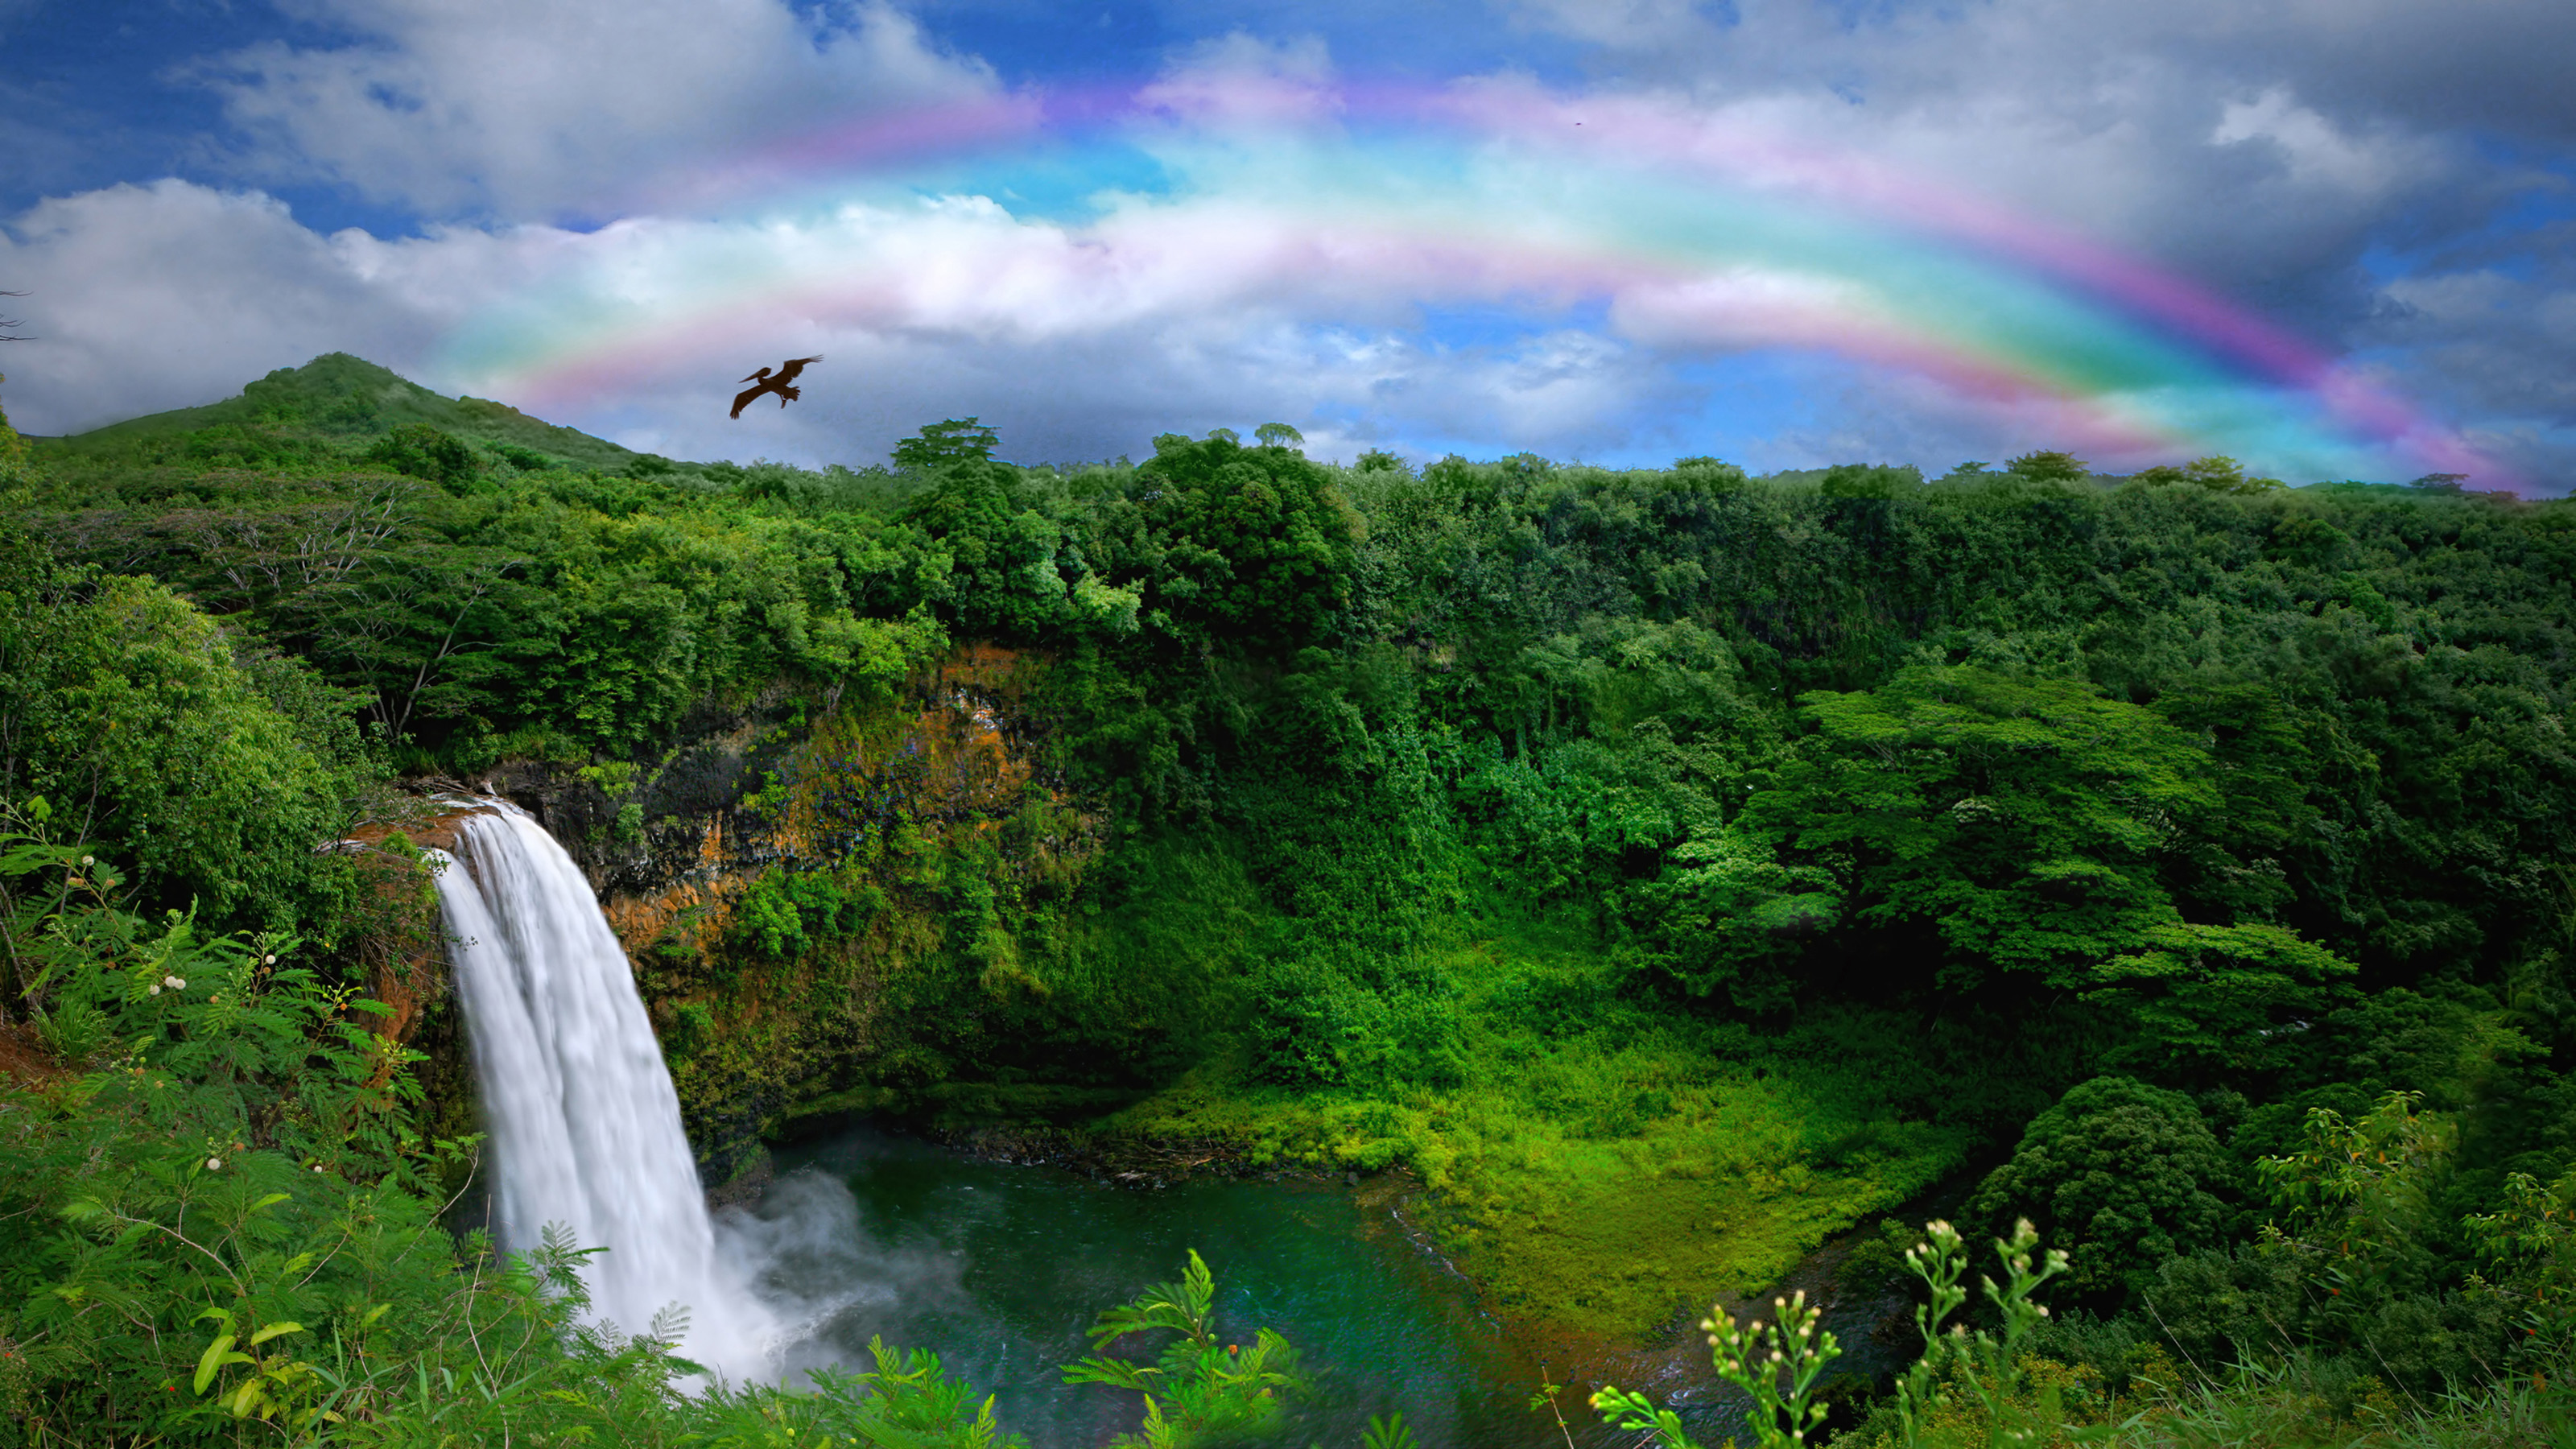 Top View Of A Beautiful Waterfall In Hawaii